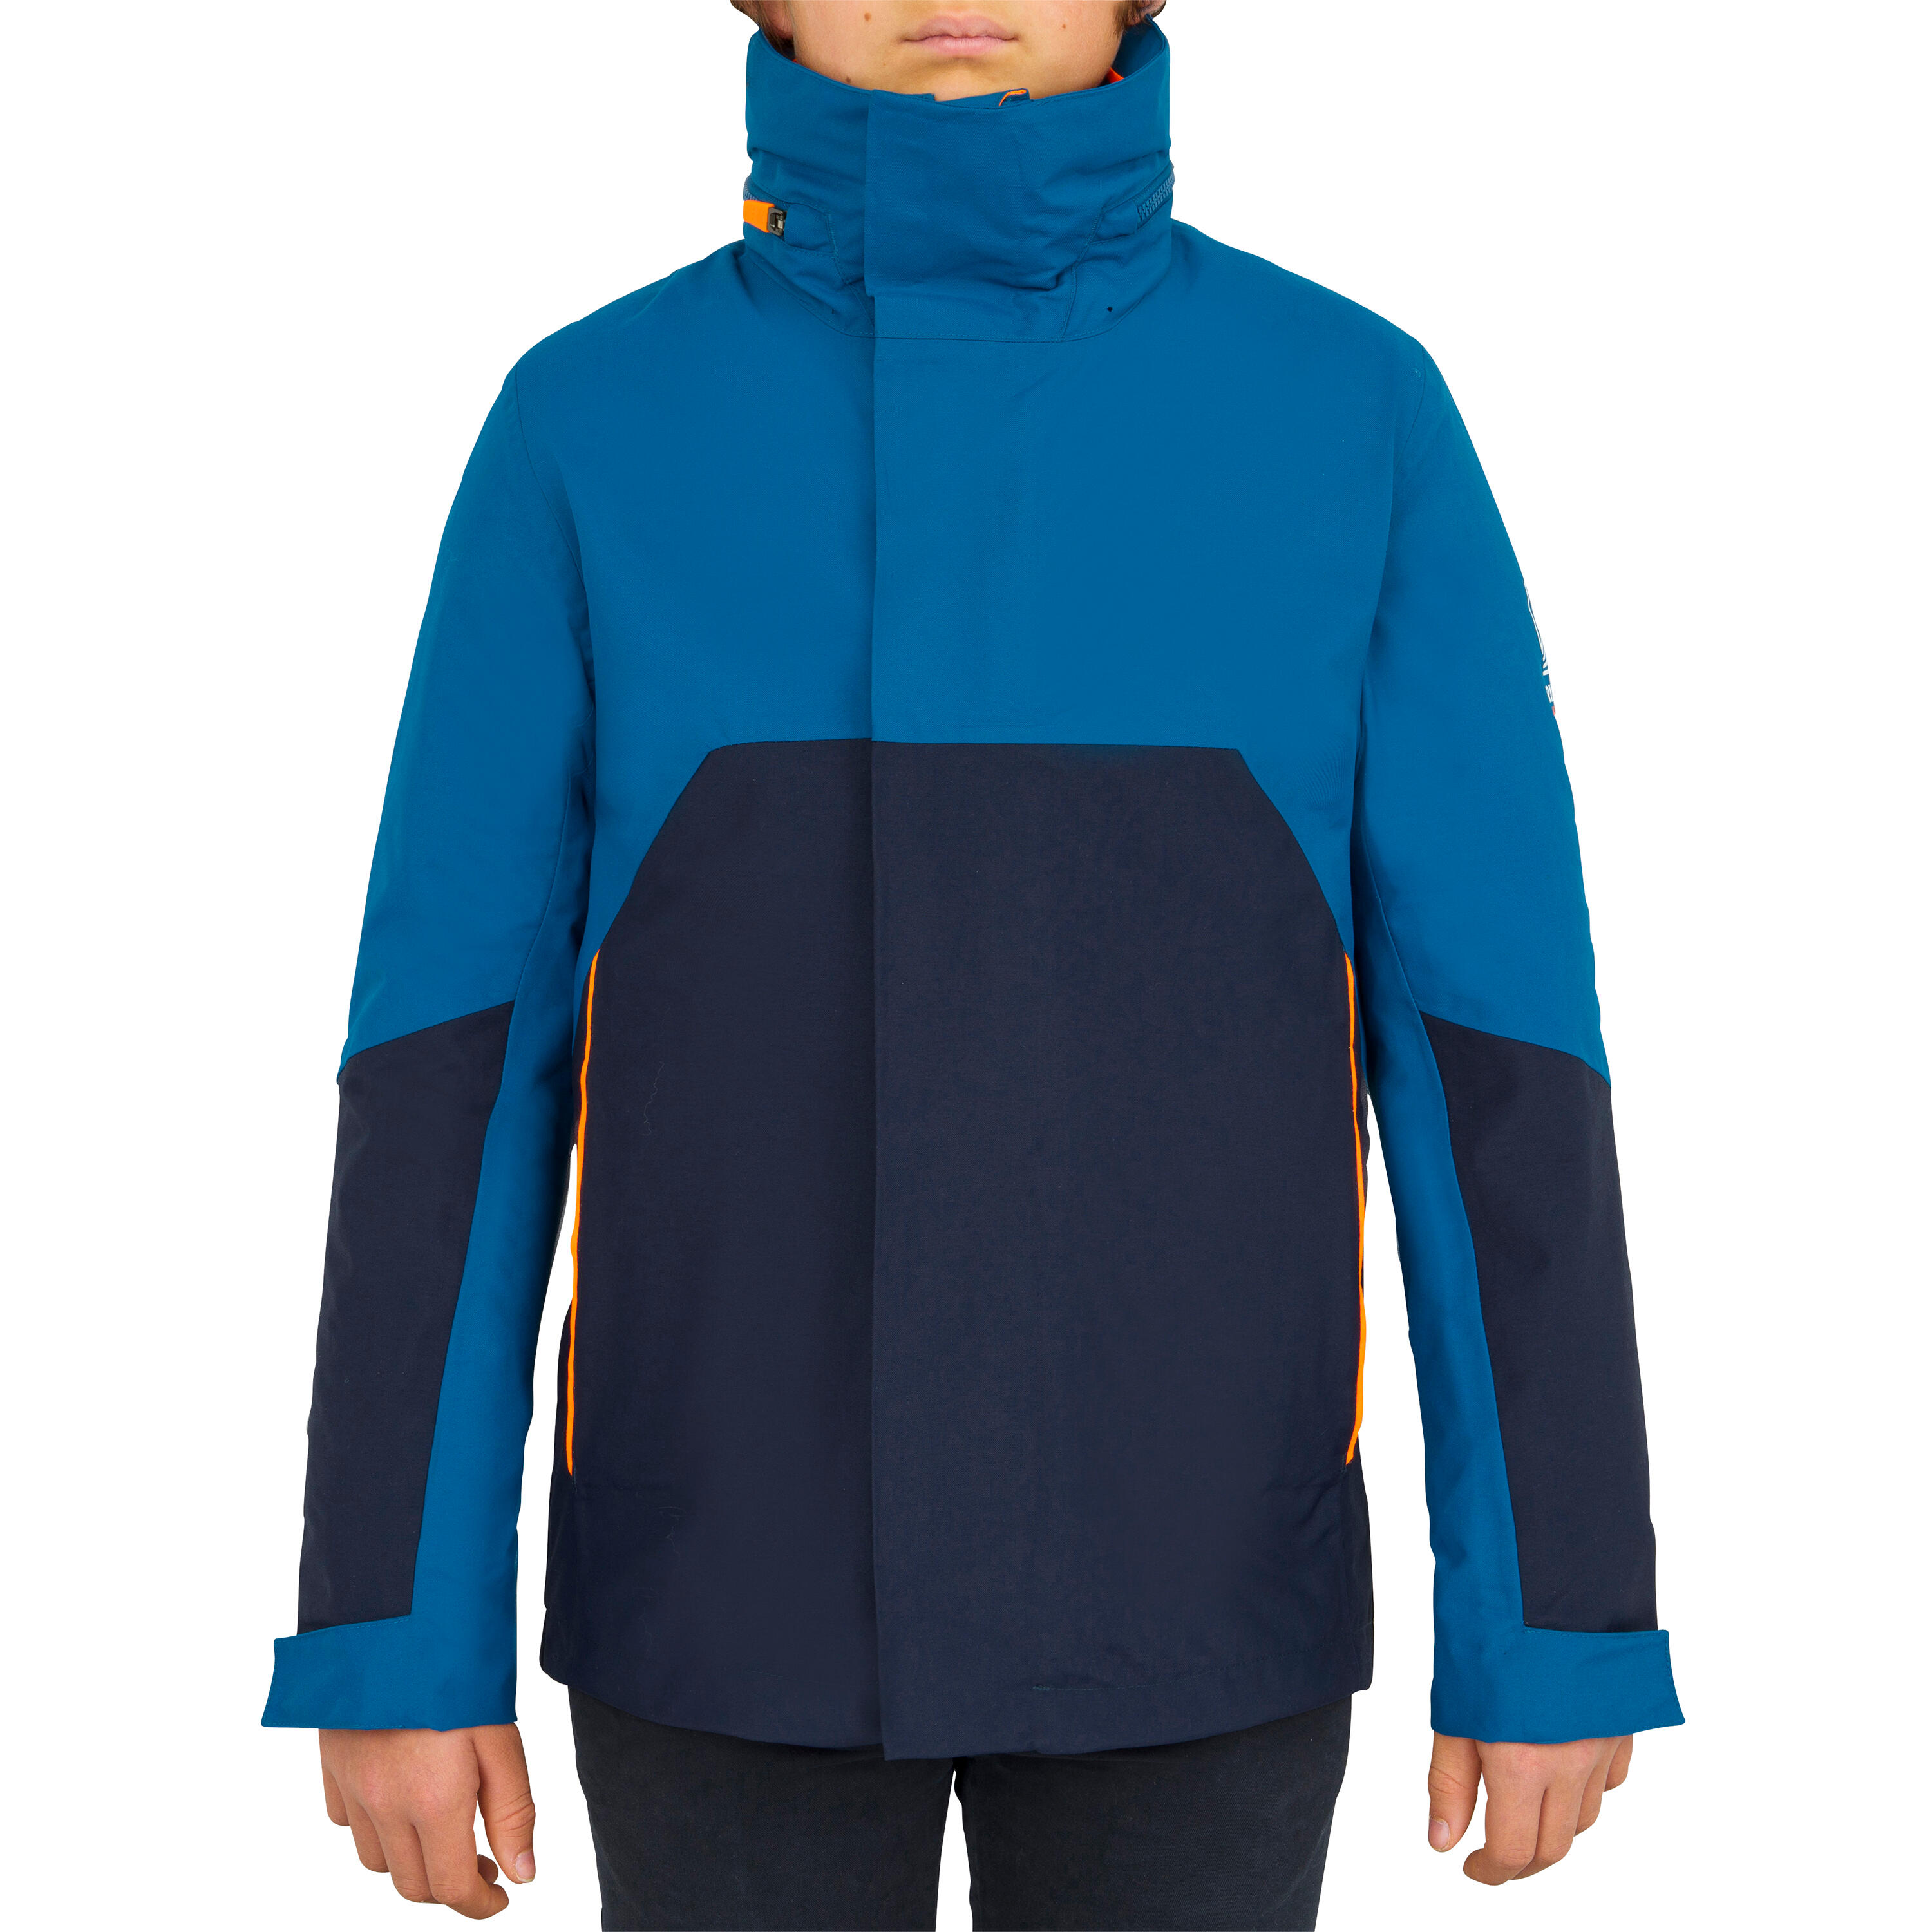 Kids' waterproof windproof sailing jacket 300 - Petrol blue 2/14